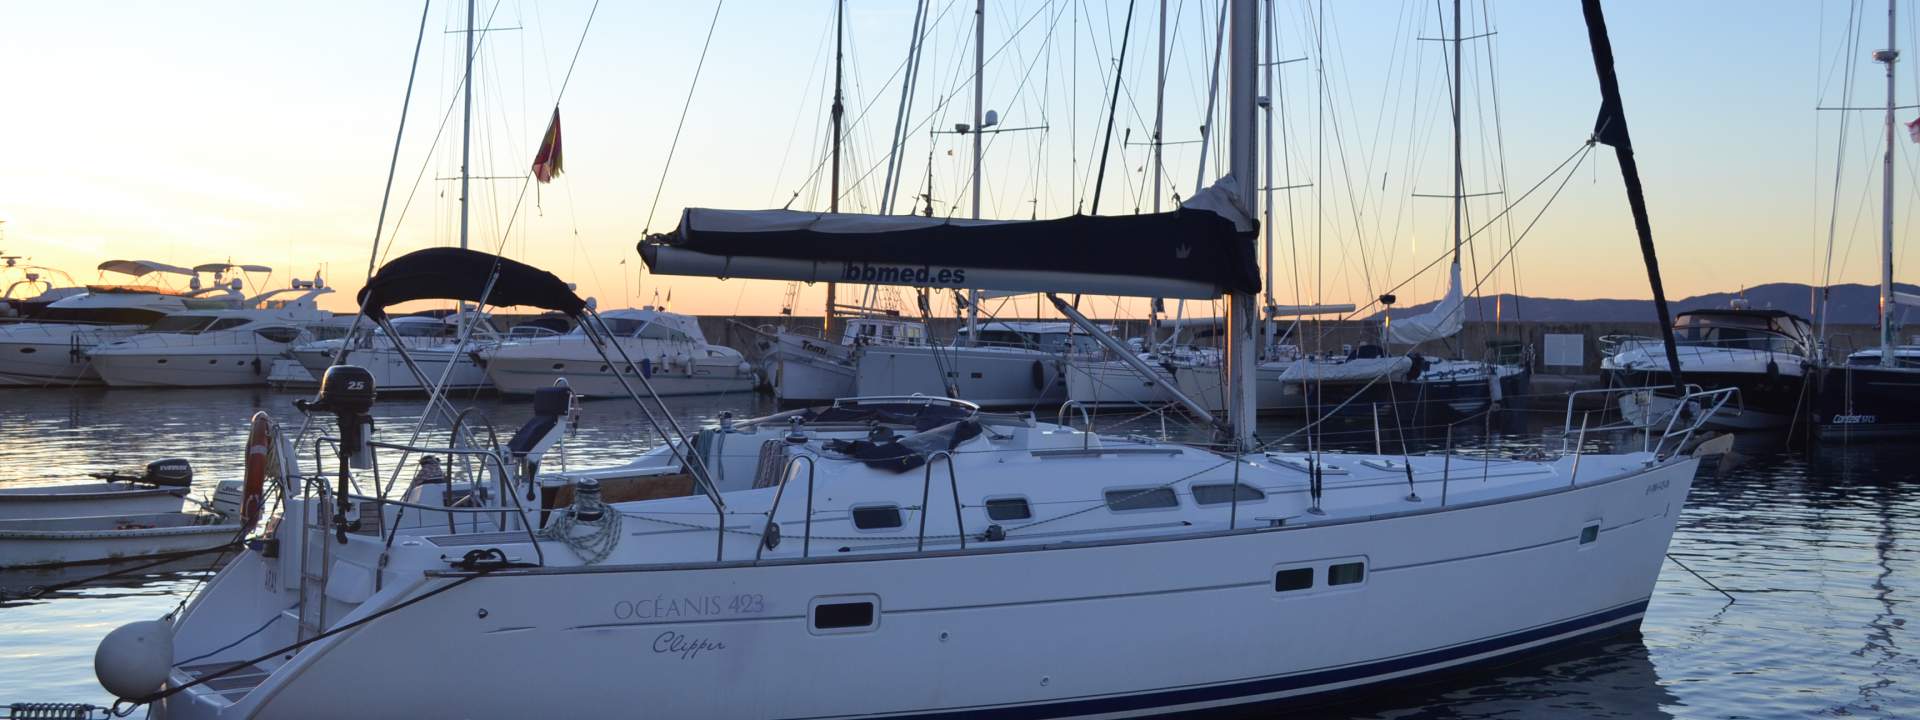 Sailboat Oceanis Clipper 423